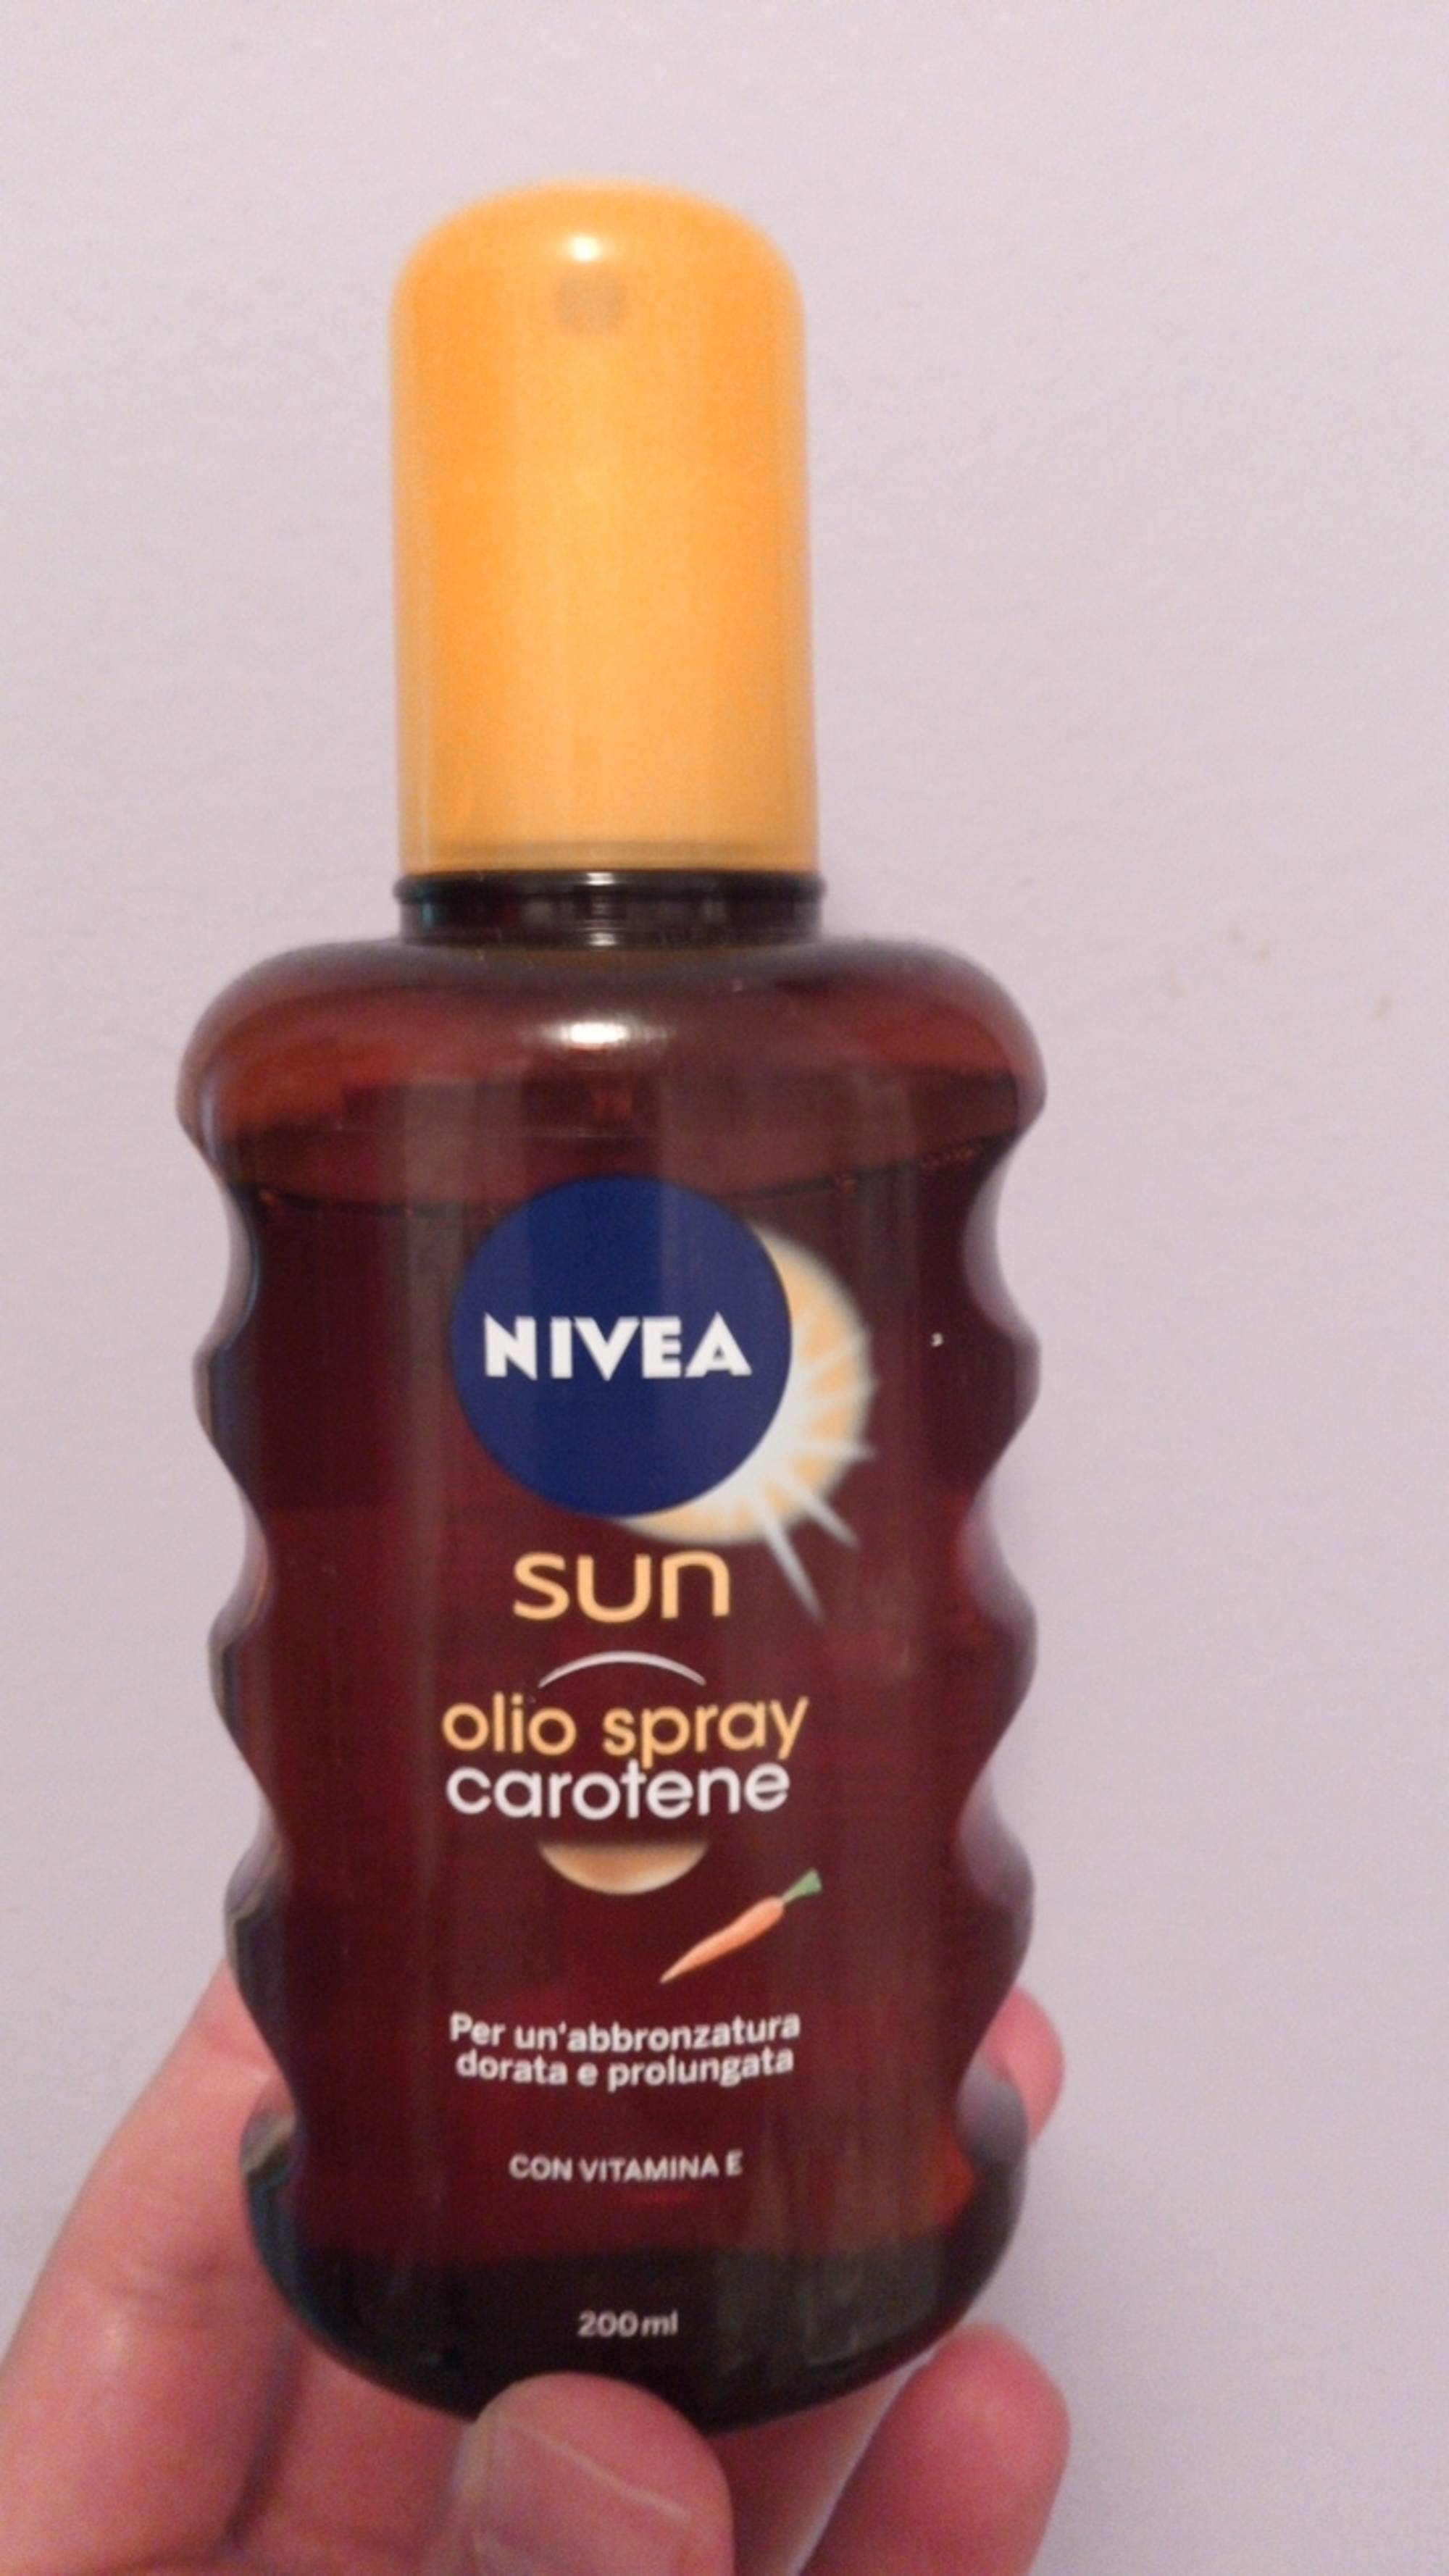 NIVEA - Sun - Olio spray carotene